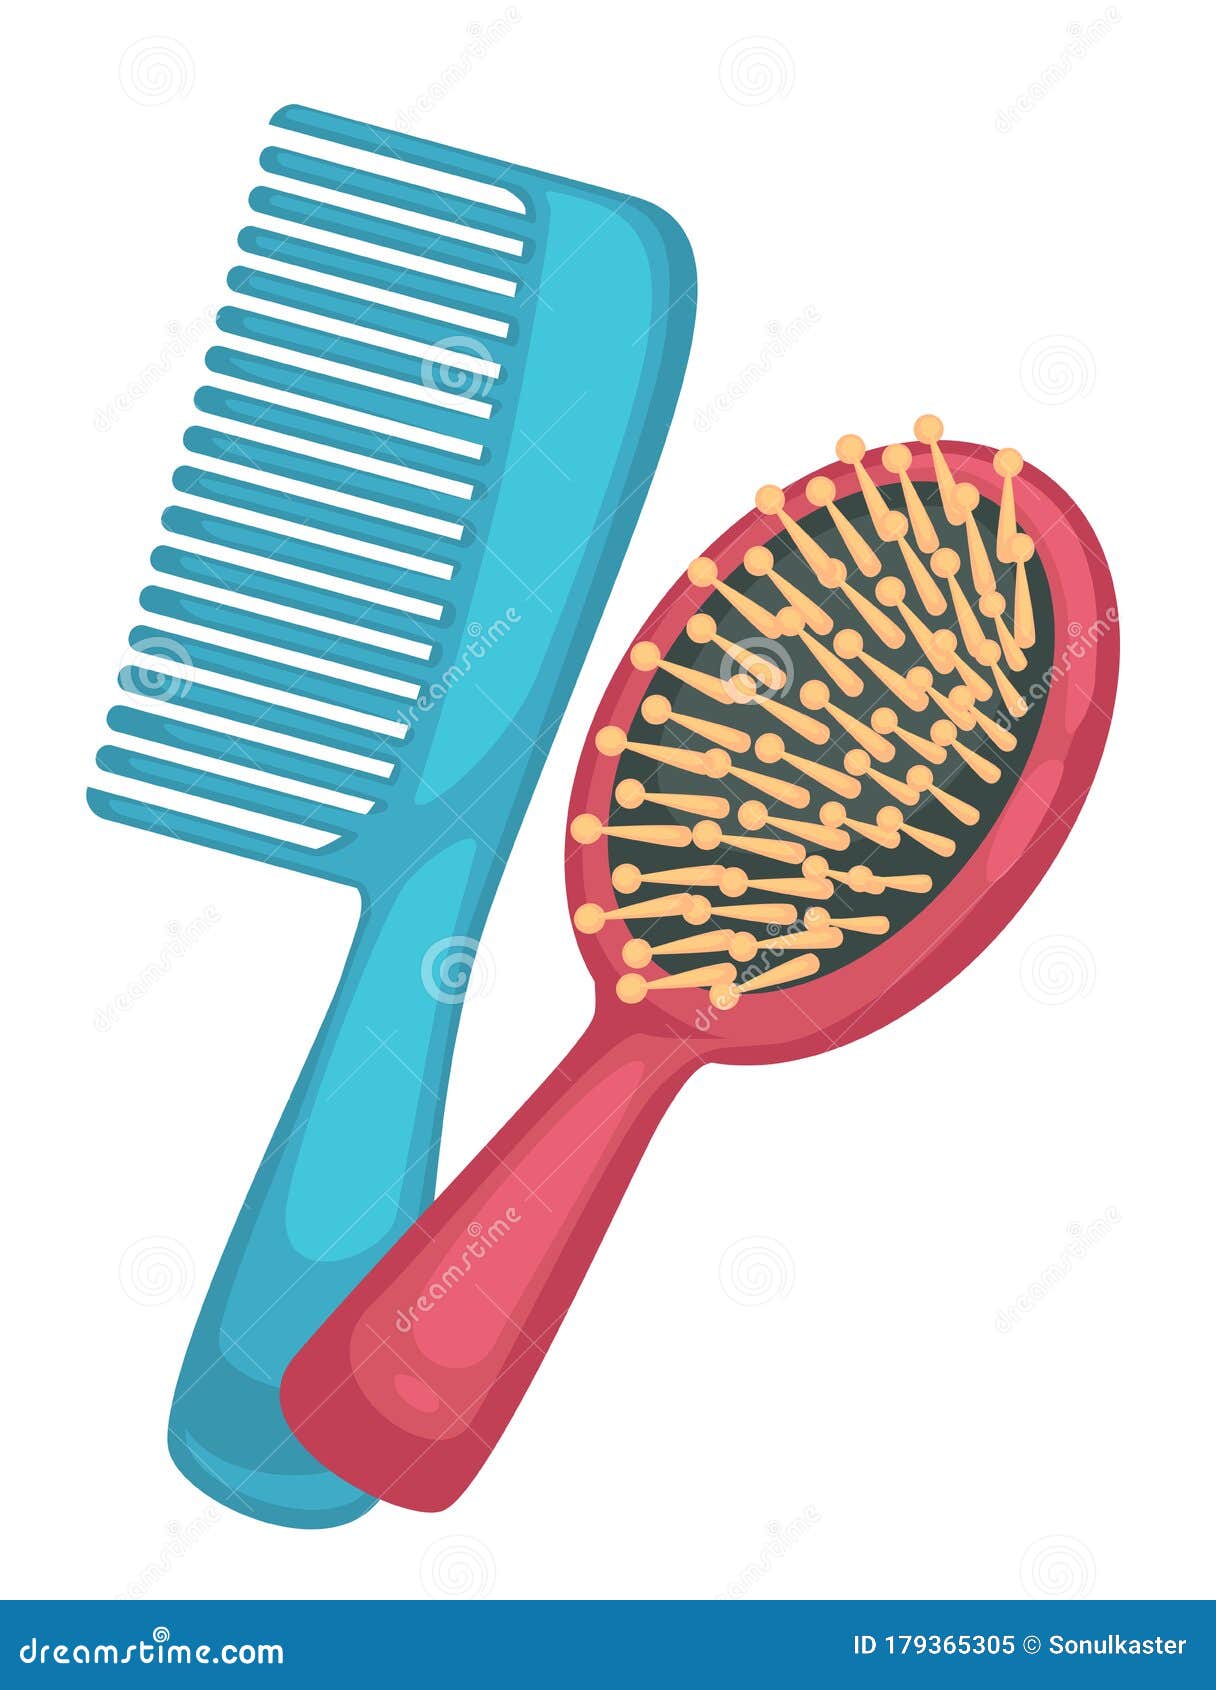 Qué peine o cepillo es mejor para tu cabello  Blog  Eurostil